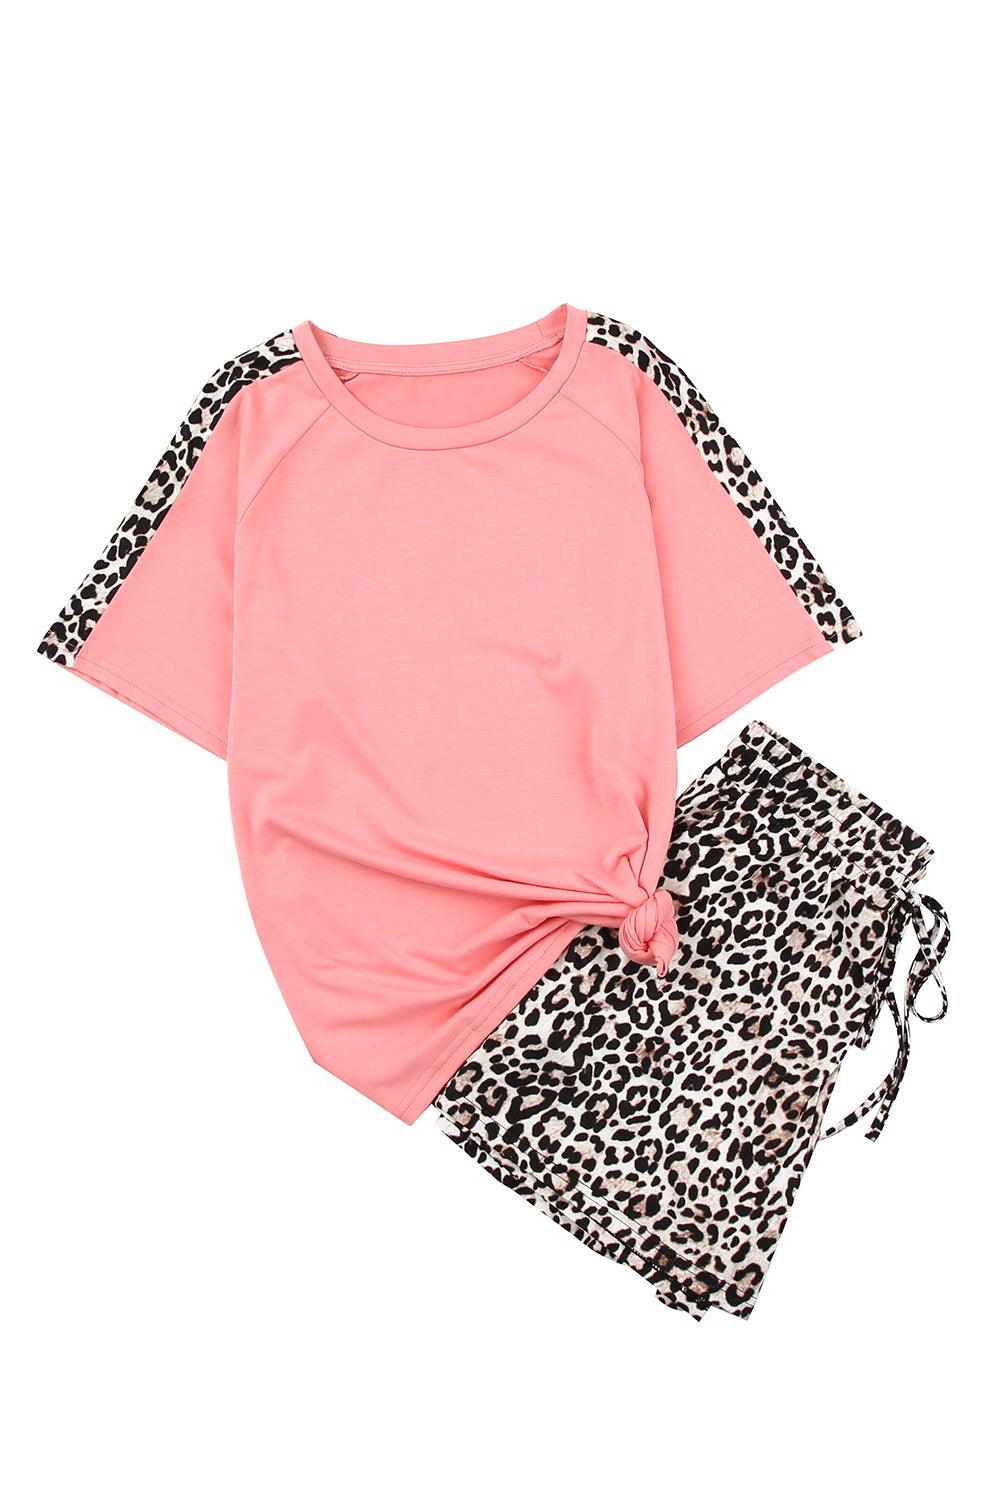 Colorblock Leopard Short Sleeve and Shorts Loungewear - L & M Kee, LLC